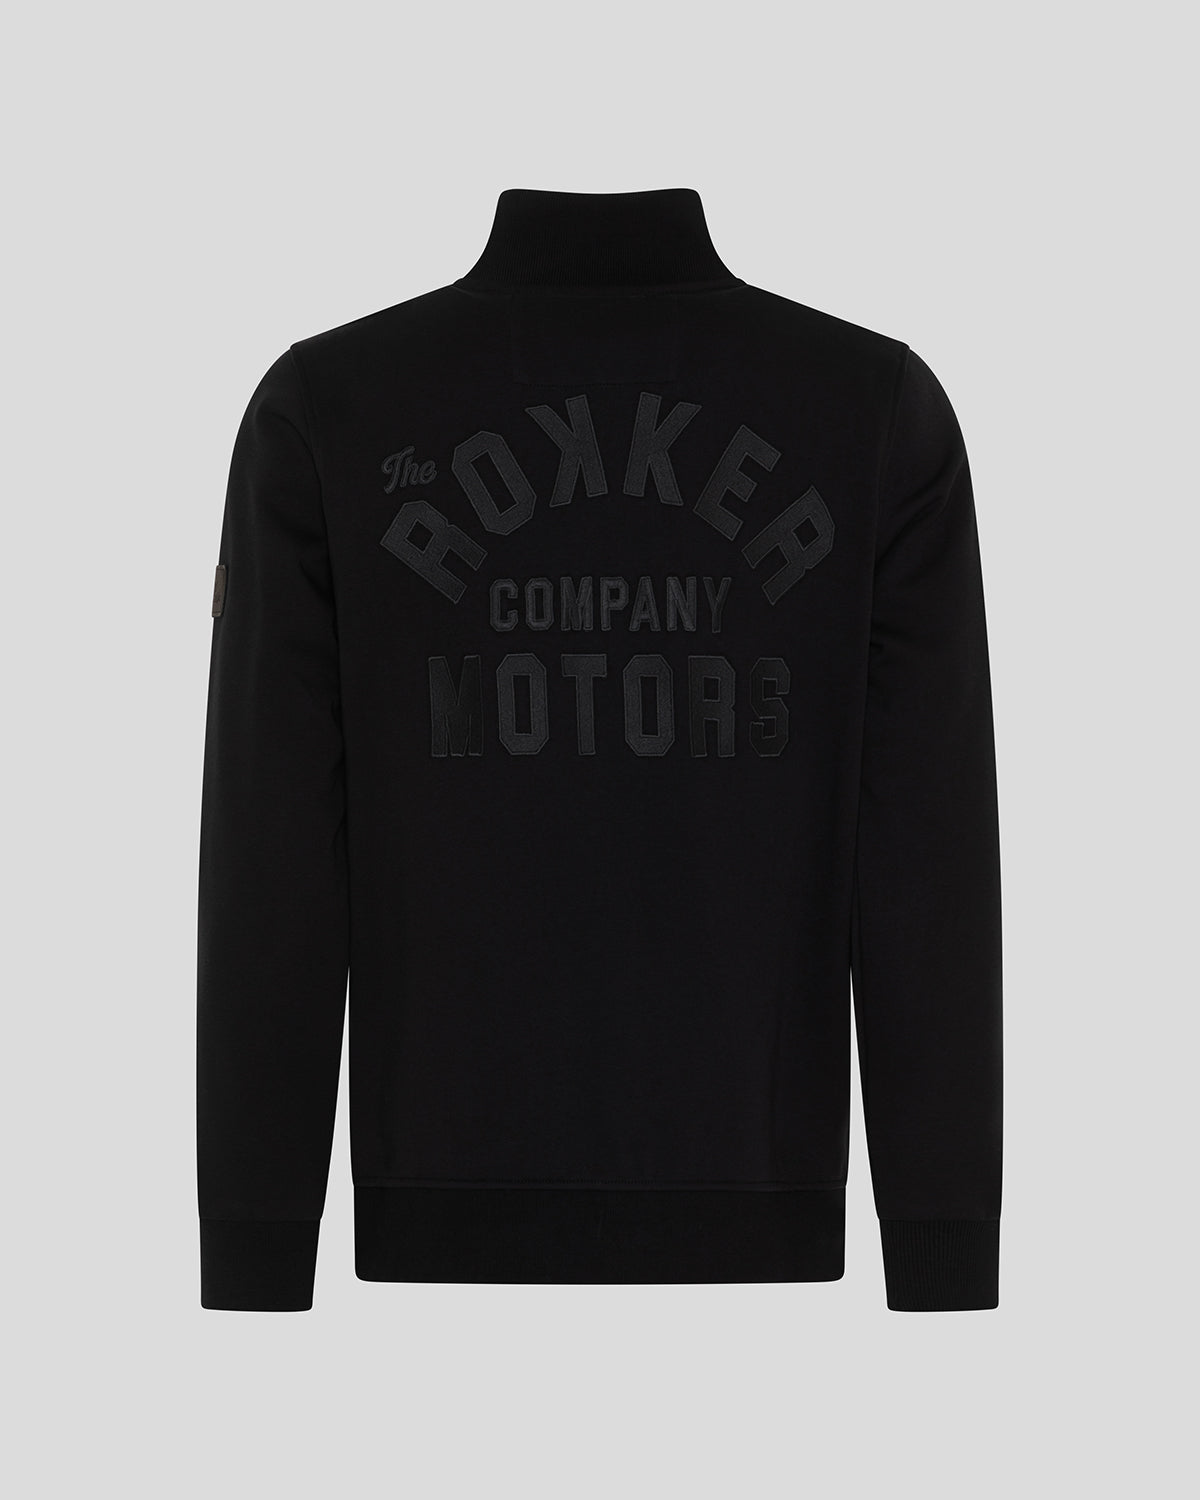 Rokker Motors Zip Jacket Black